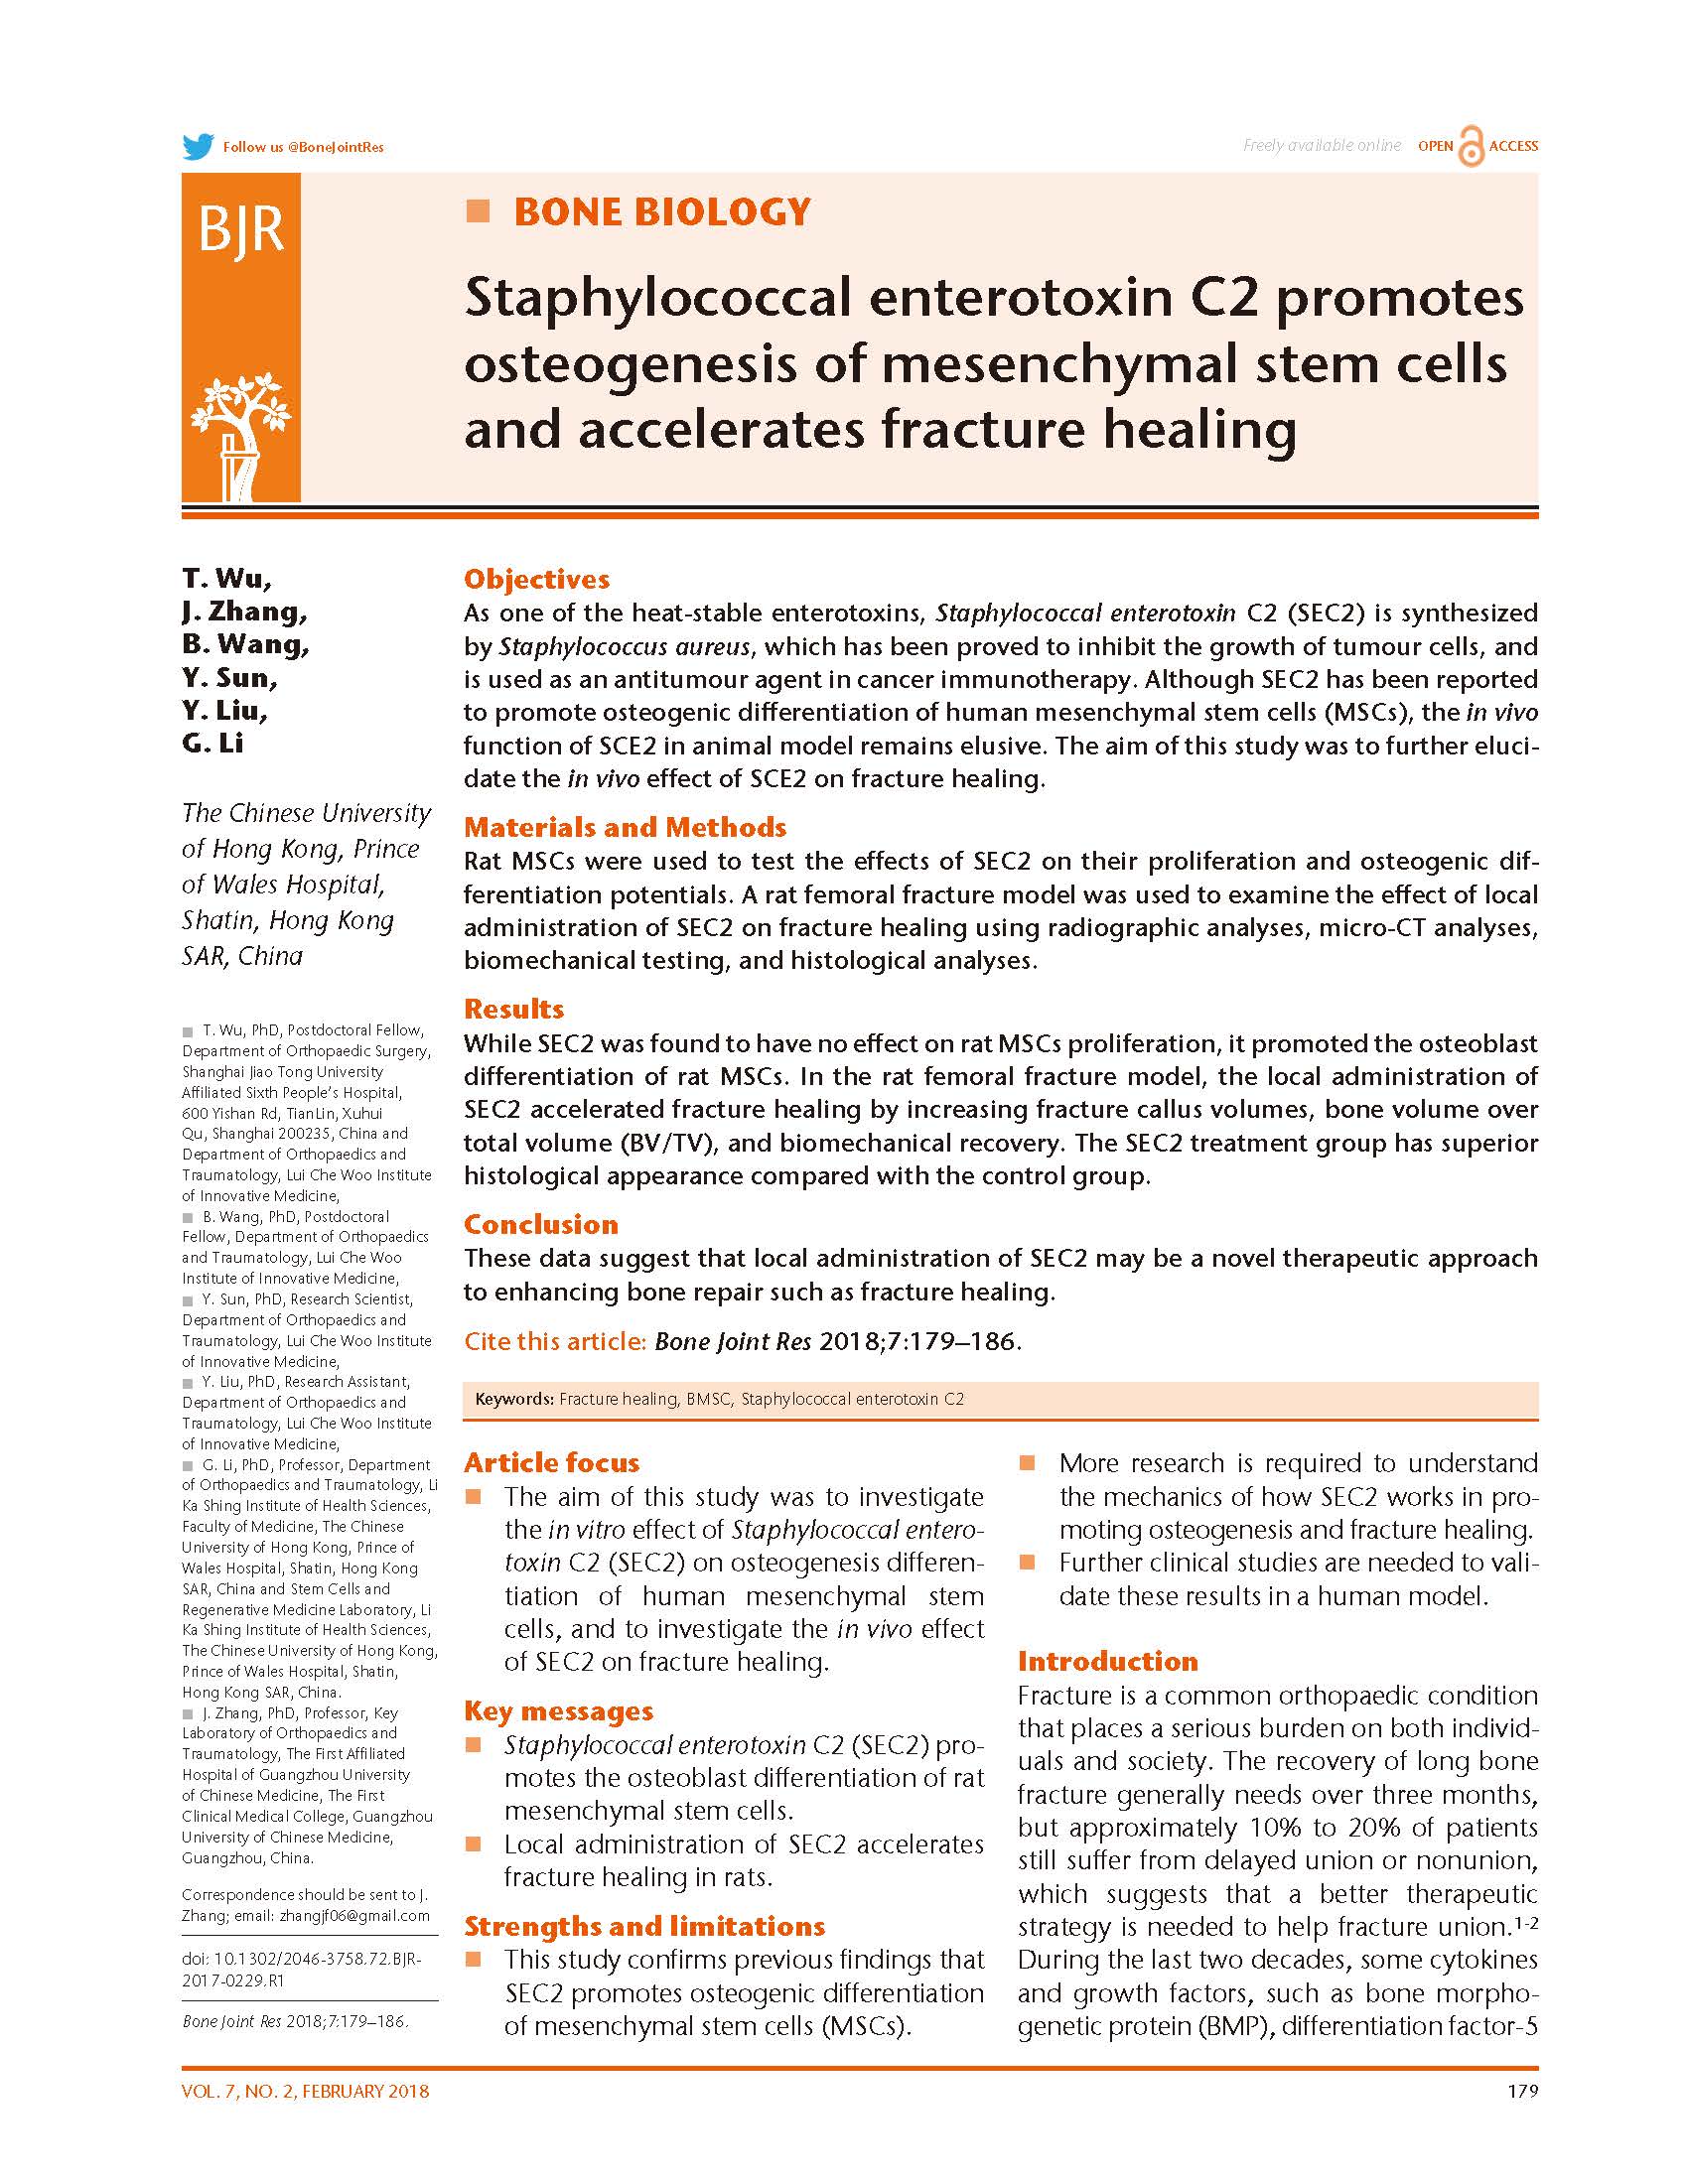 Staphylococcal enterotoxin C2 promotes osteogenesis of mesen